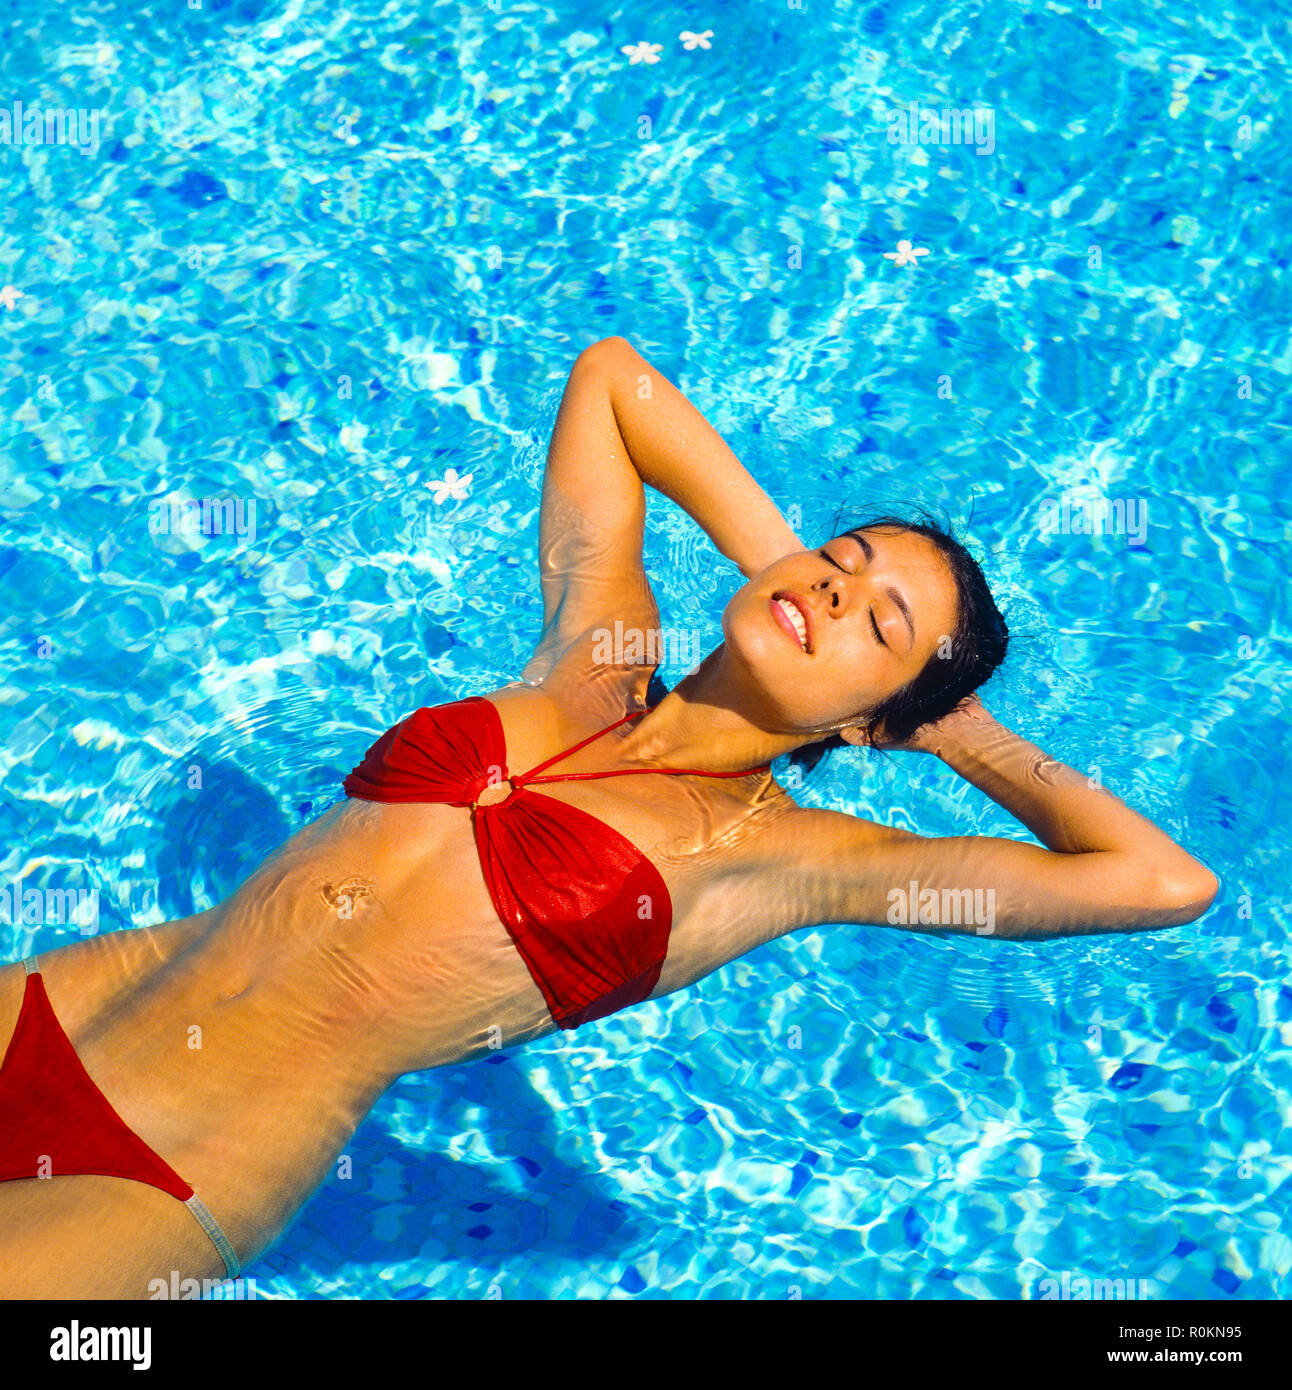 Bikinis rojos fotografías e imágenes de alta resolución - Alamy